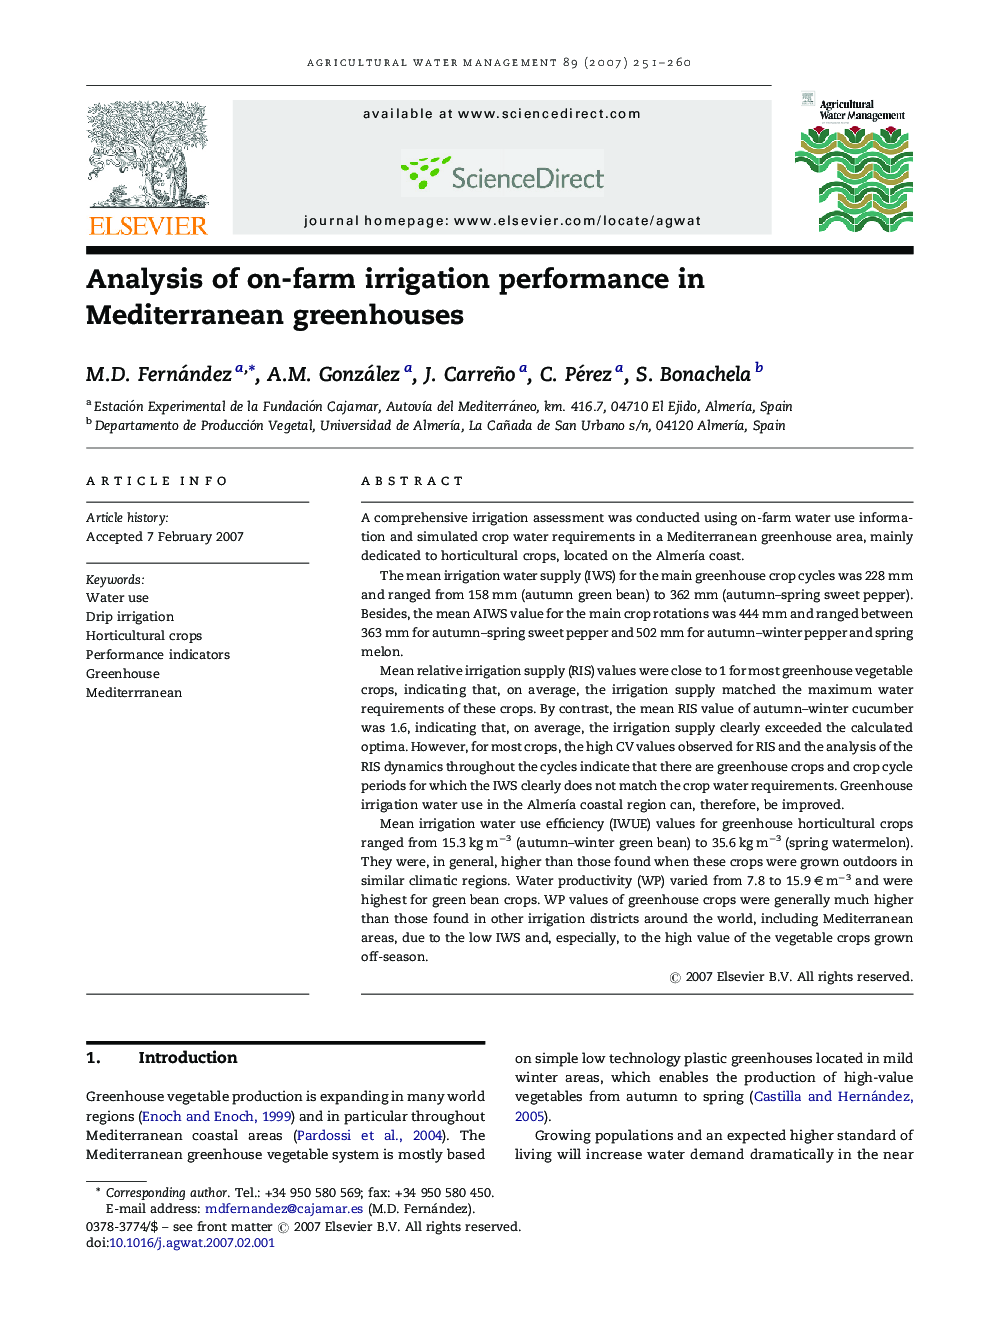 Analysis of on-farm irrigation performance in Mediterranean greenhouses